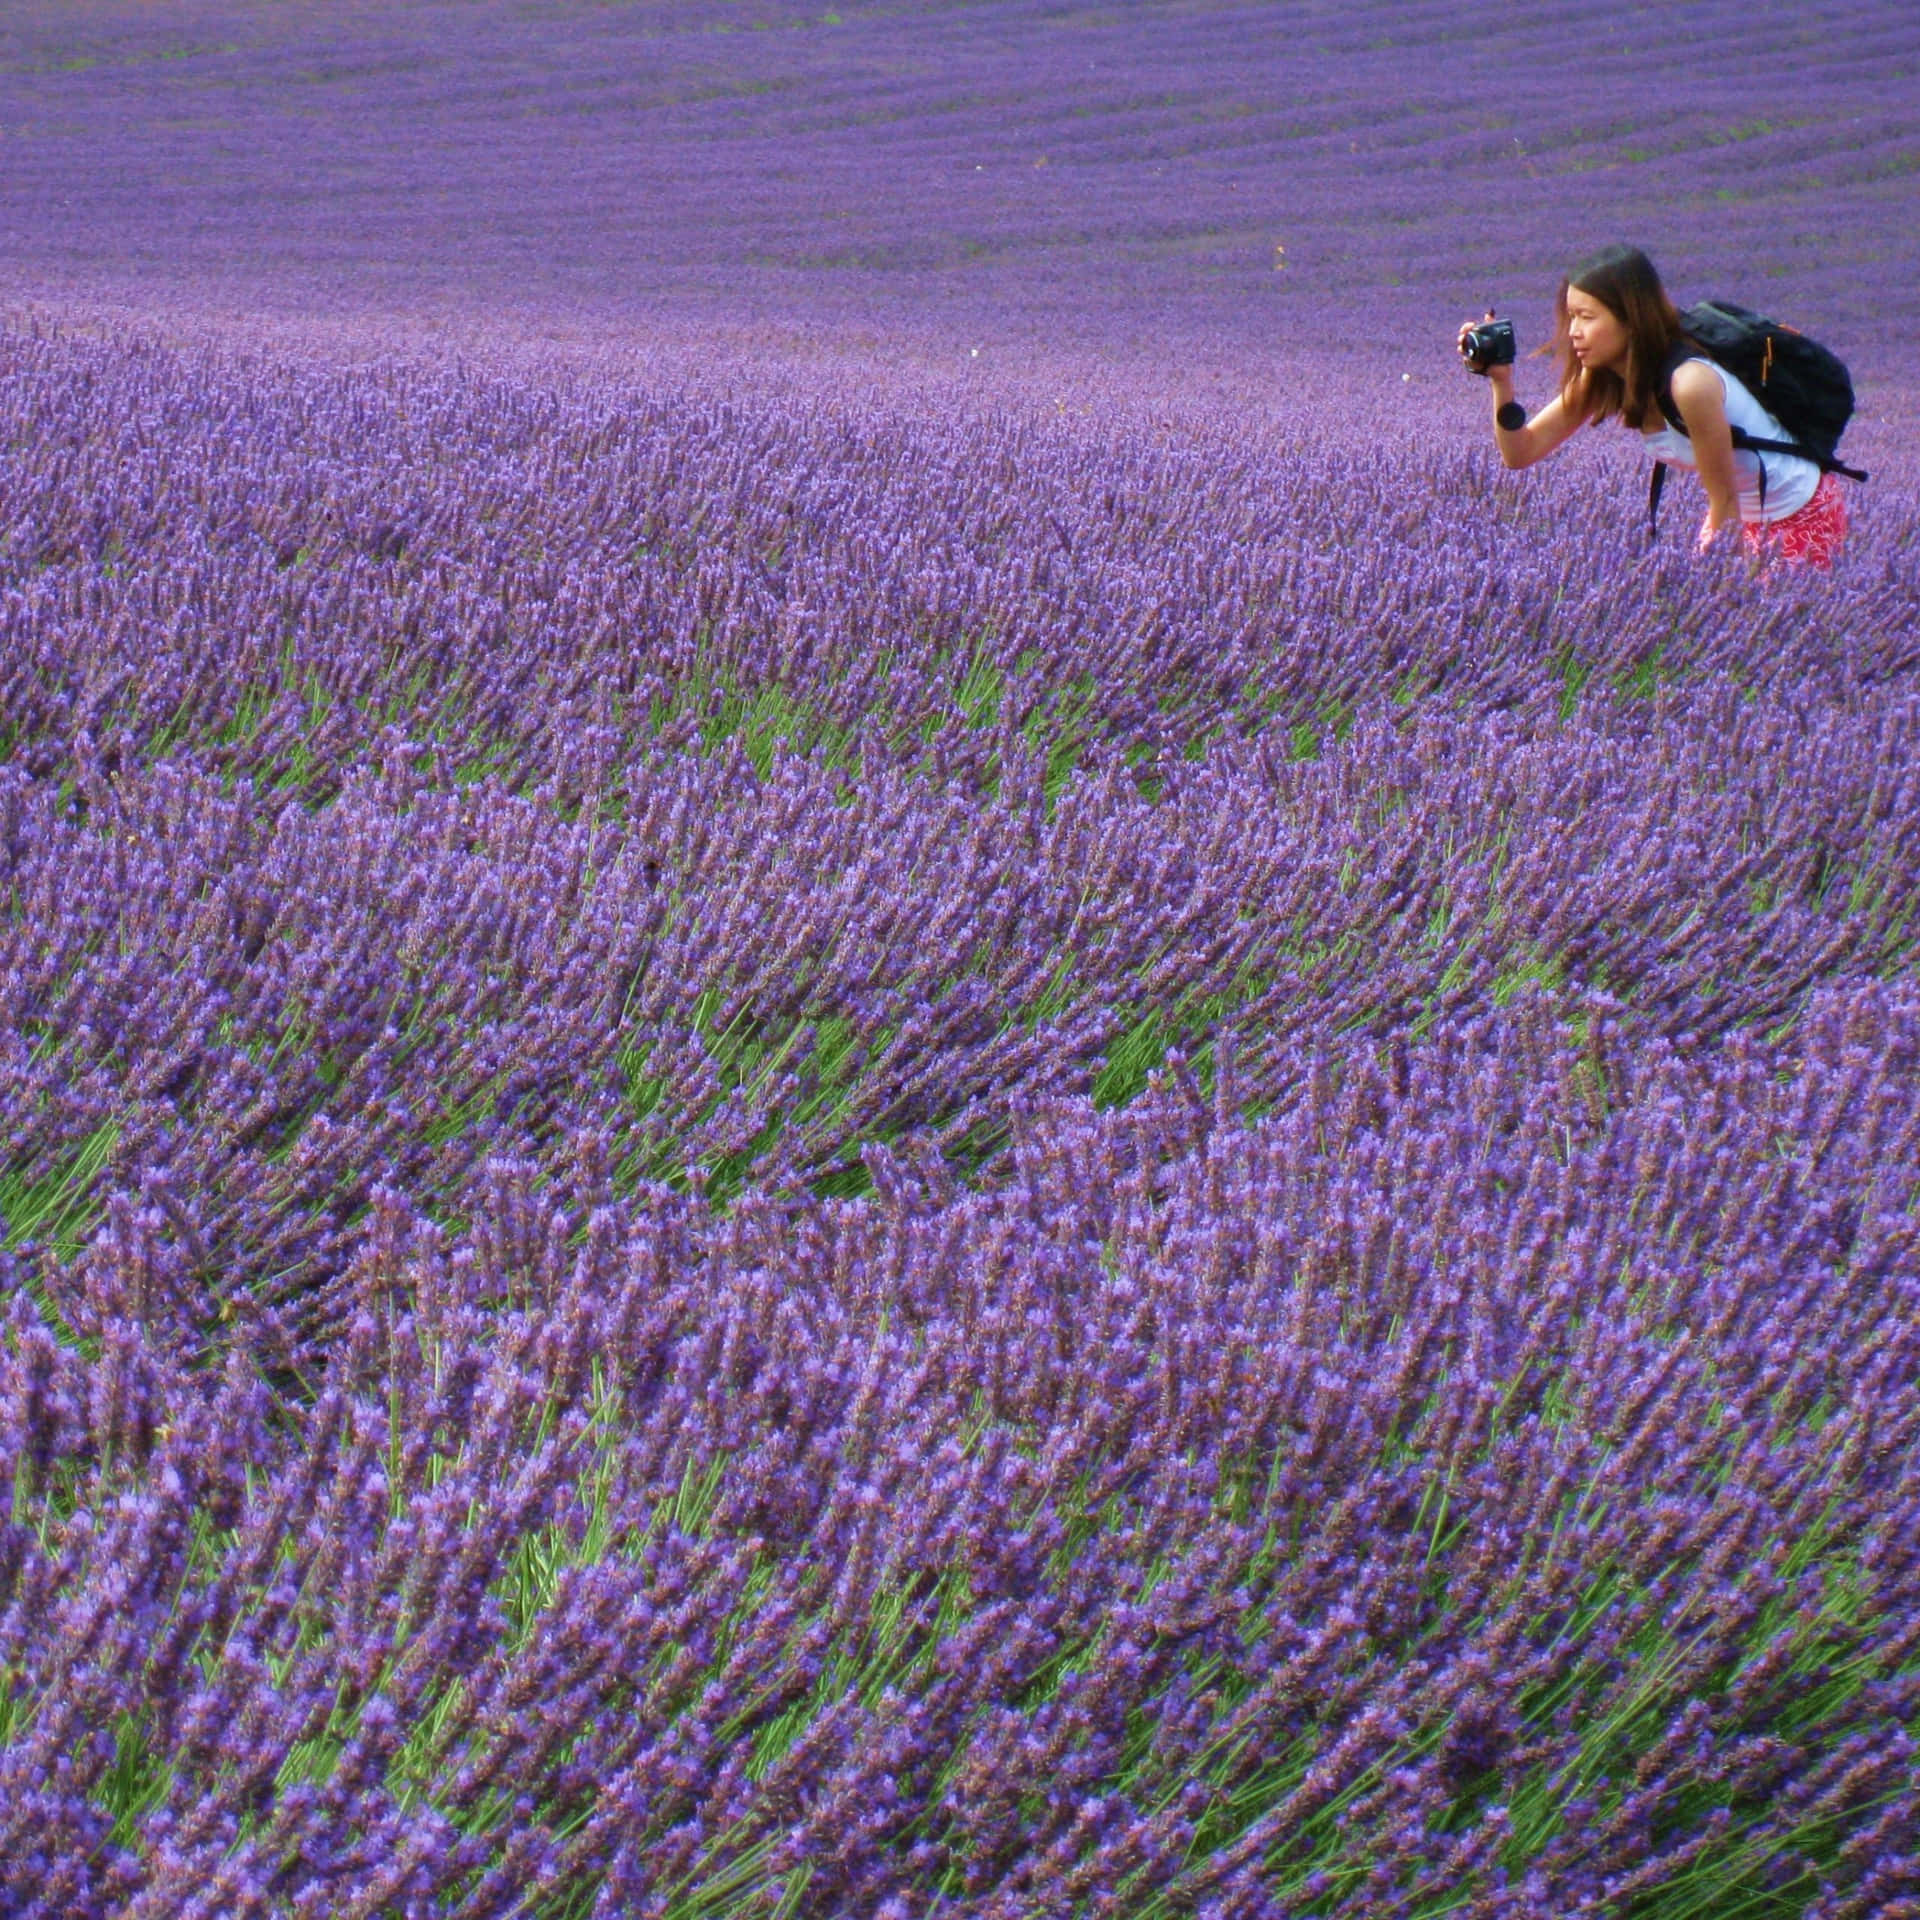 "A beautiful landscape of purple lavender flowers in a lush green field."